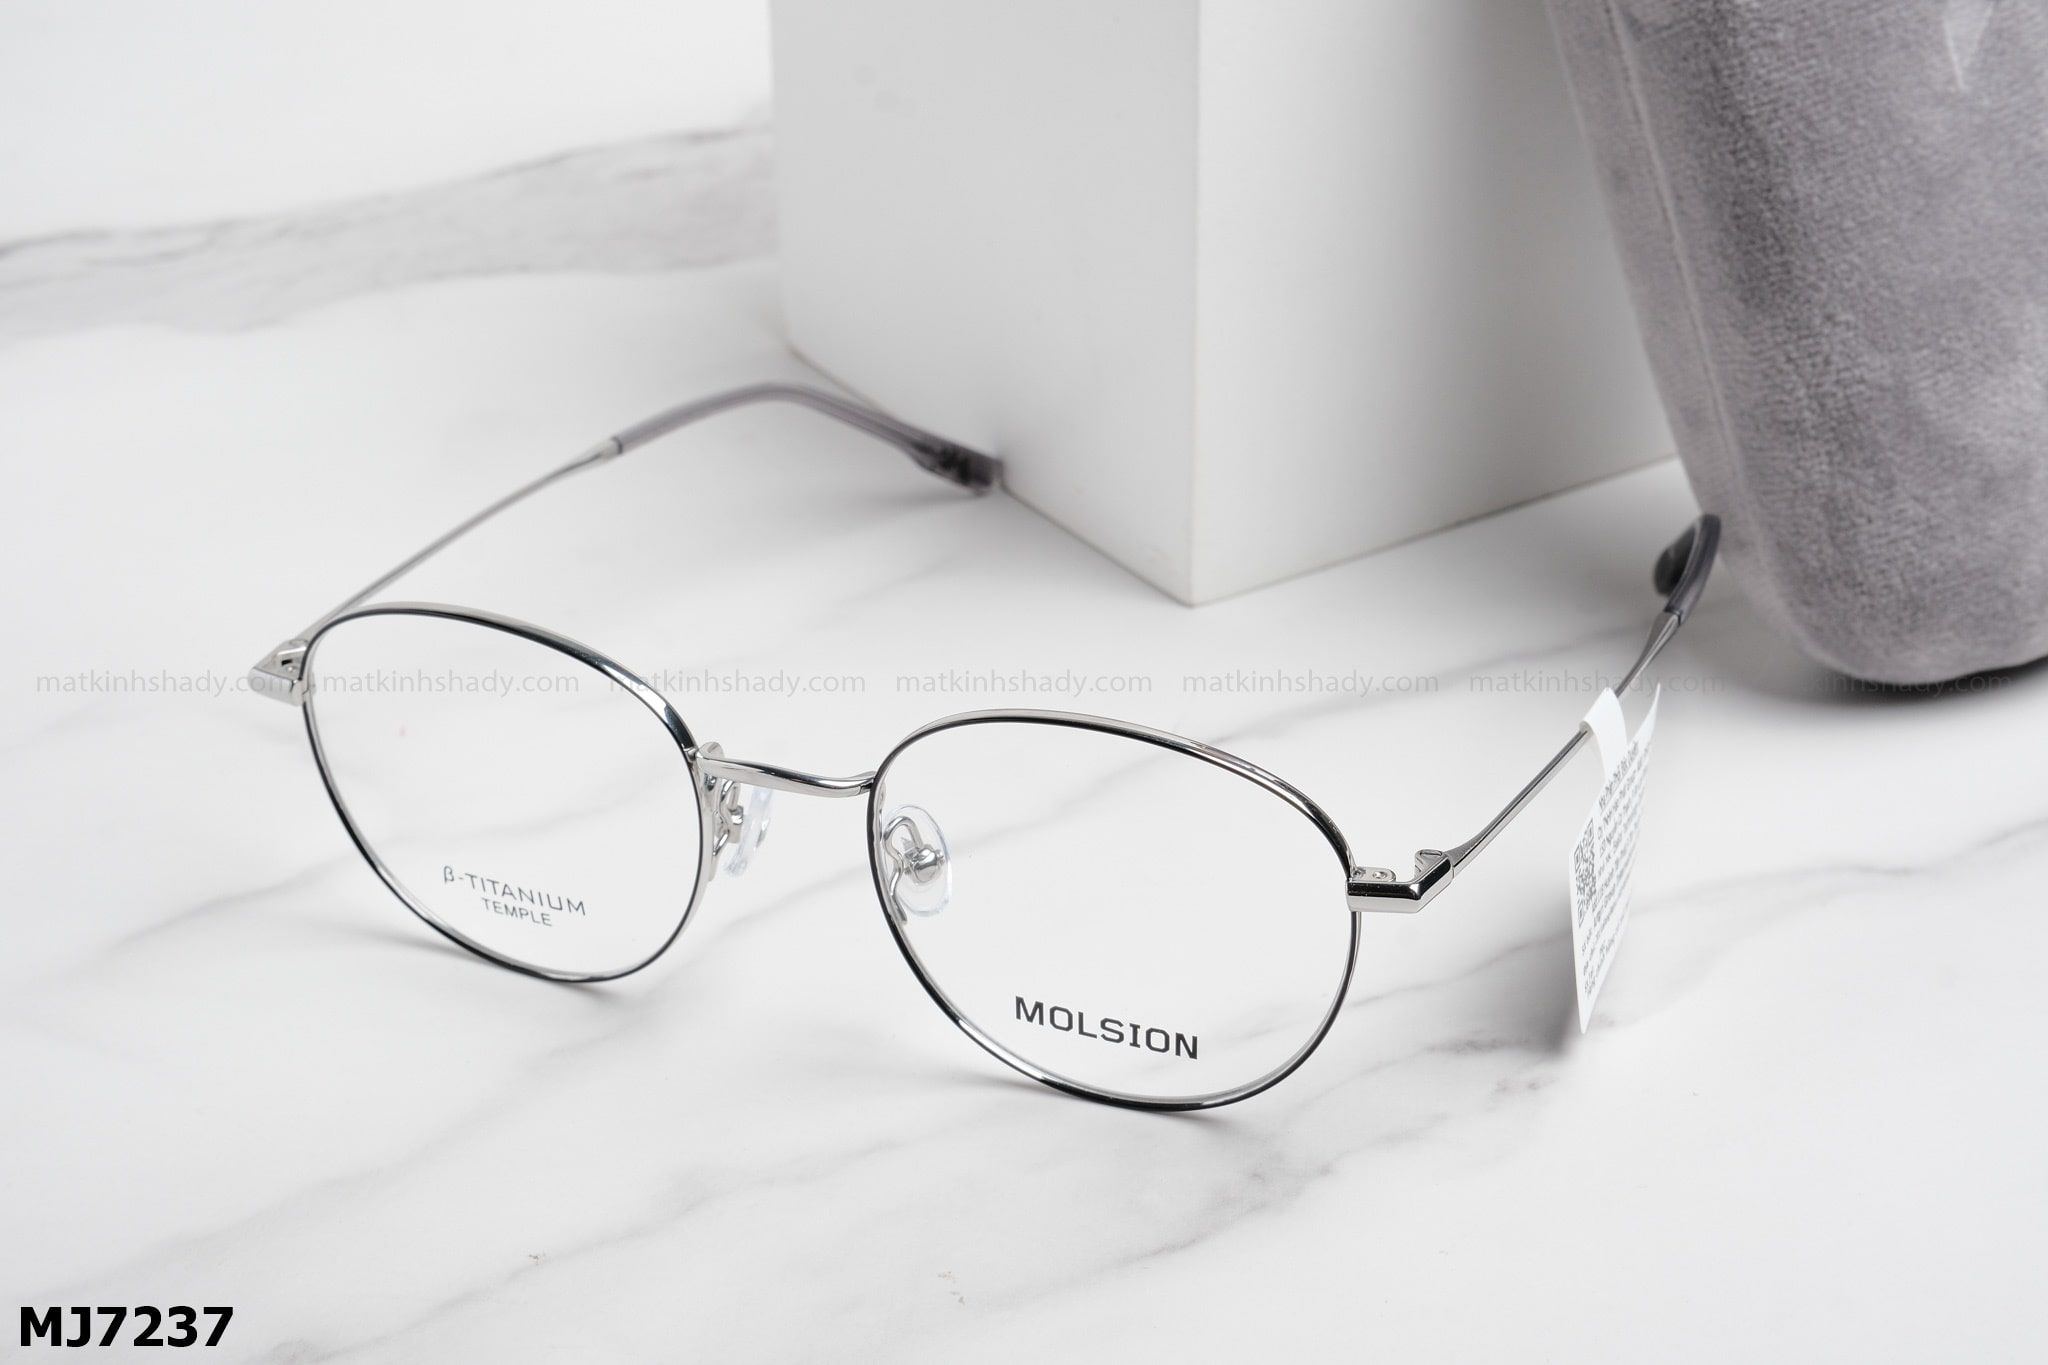  Molsion Eyewear - Glasses - MJ7237 